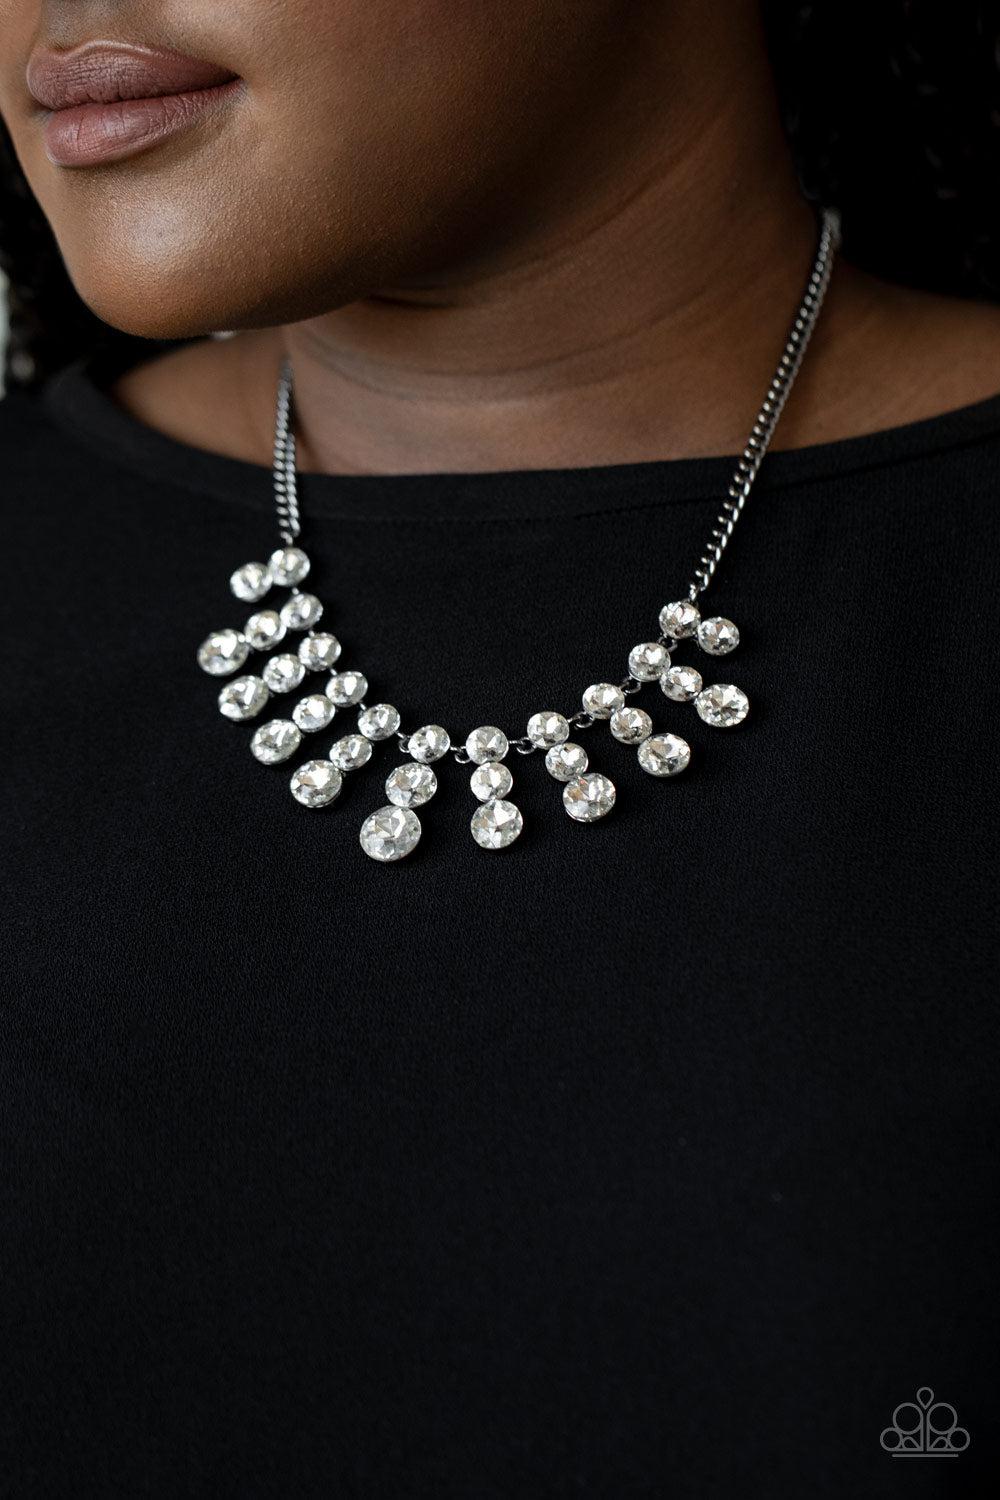 Celebrity Couture Gunmetal Black & White Rhinestone Necklace - Paparazzi Accessories- lightbox - CarasShop.com - $5 Jewelry by Cara Jewels